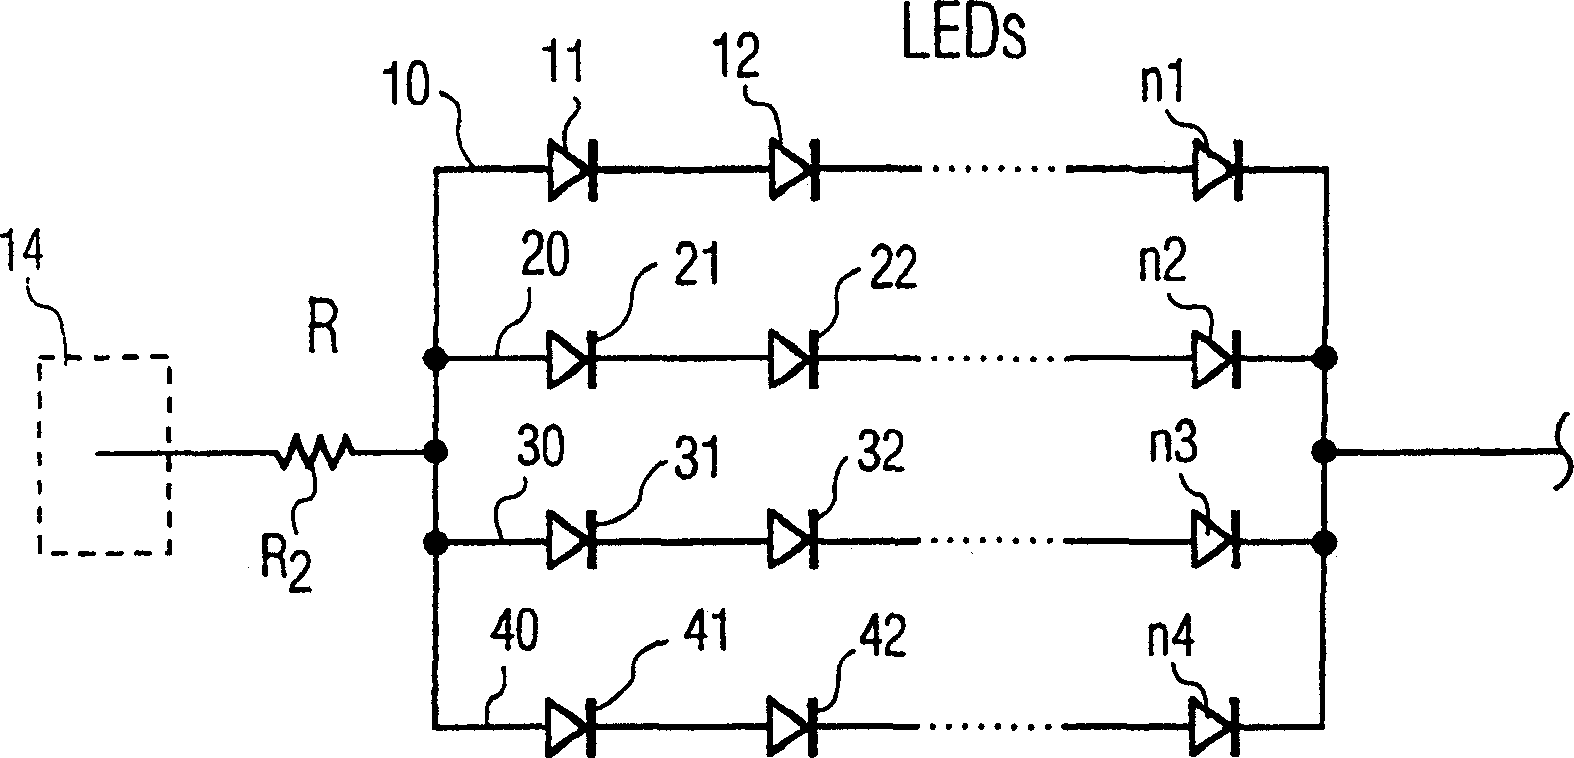 Three-dimensional lattice structure based LED array for illumination